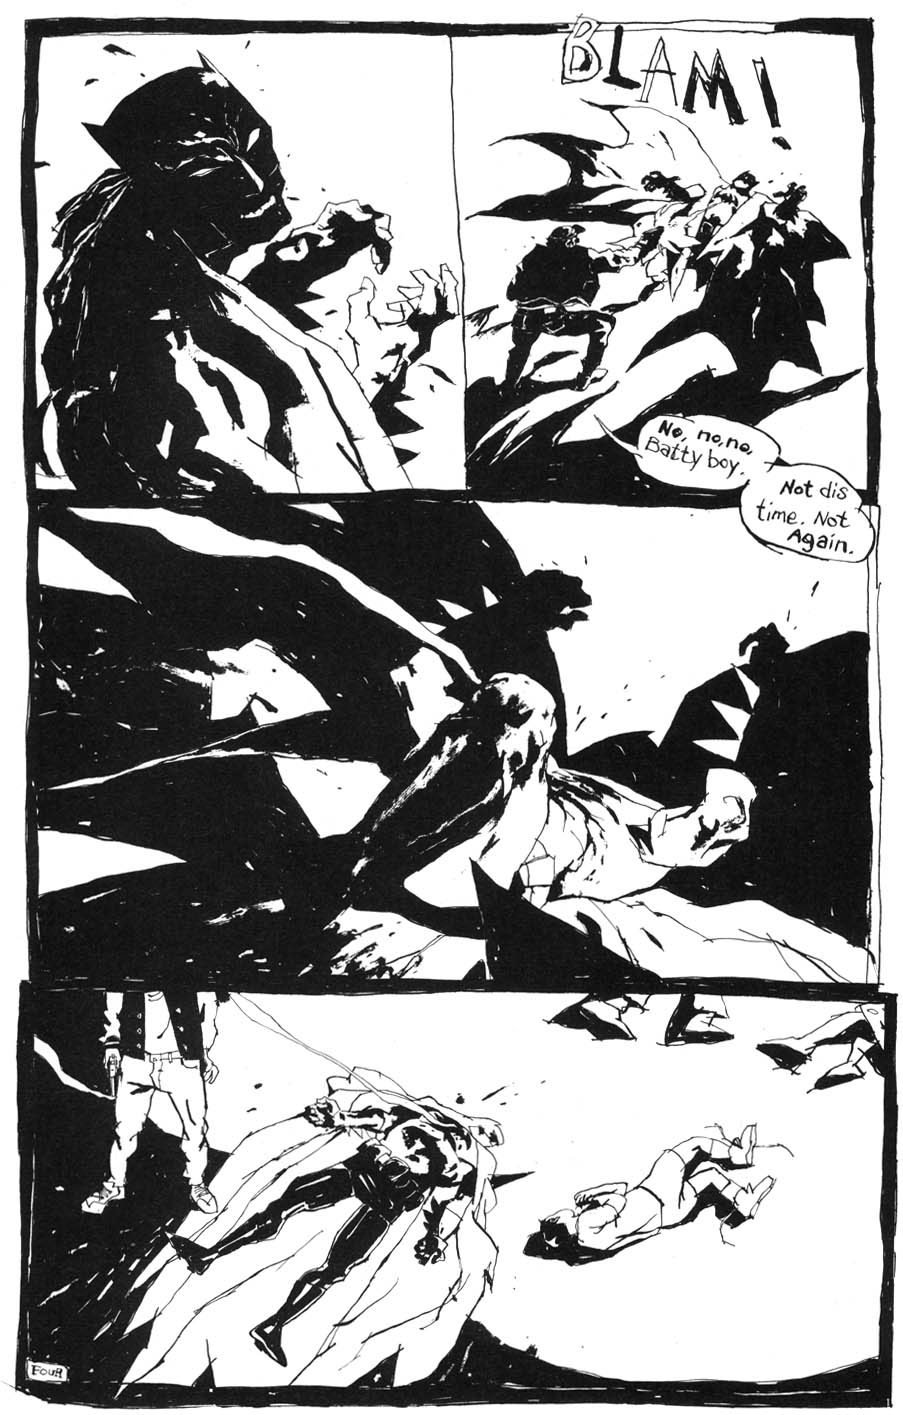 Batman - Black And White 2, Part 1 of 2